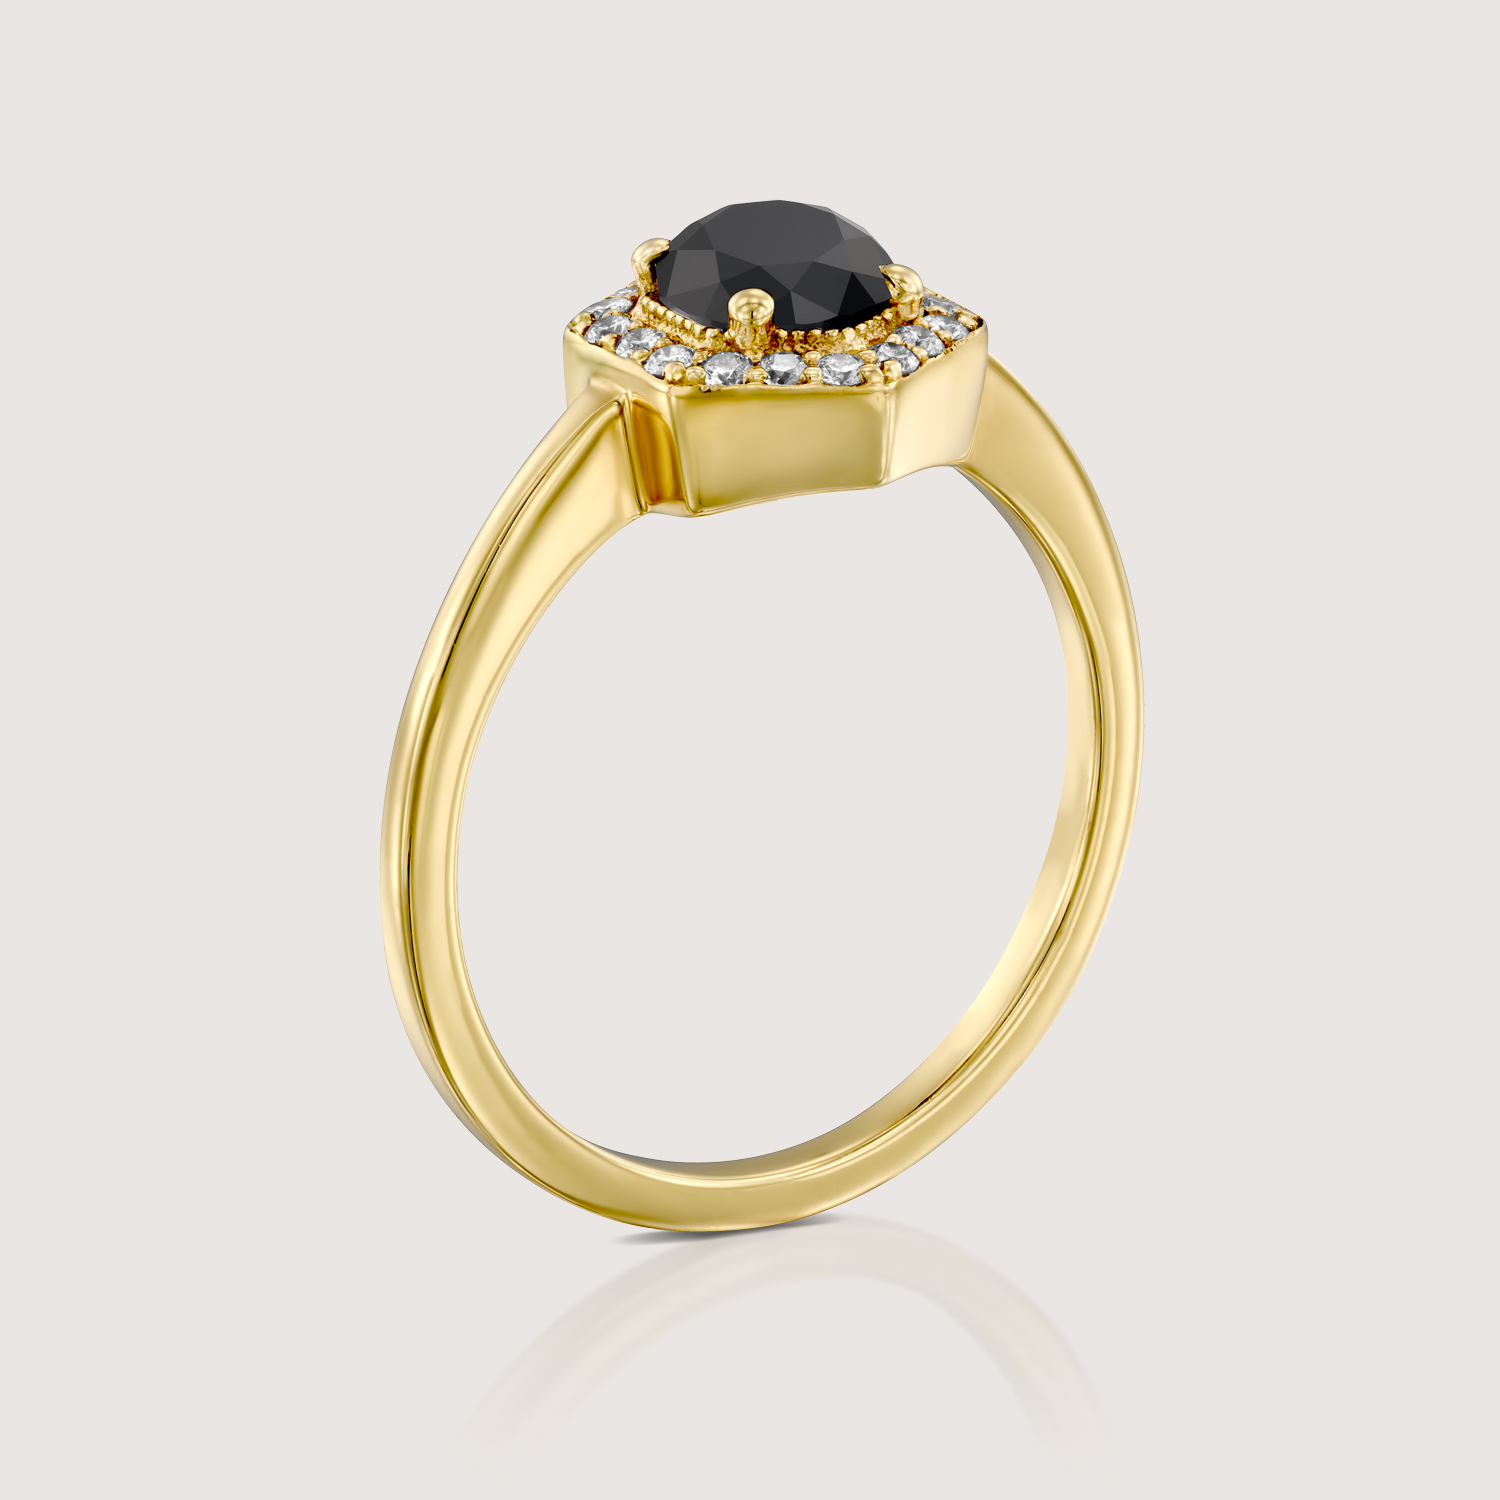 Amy Gold Ring Black 5mm Diamond